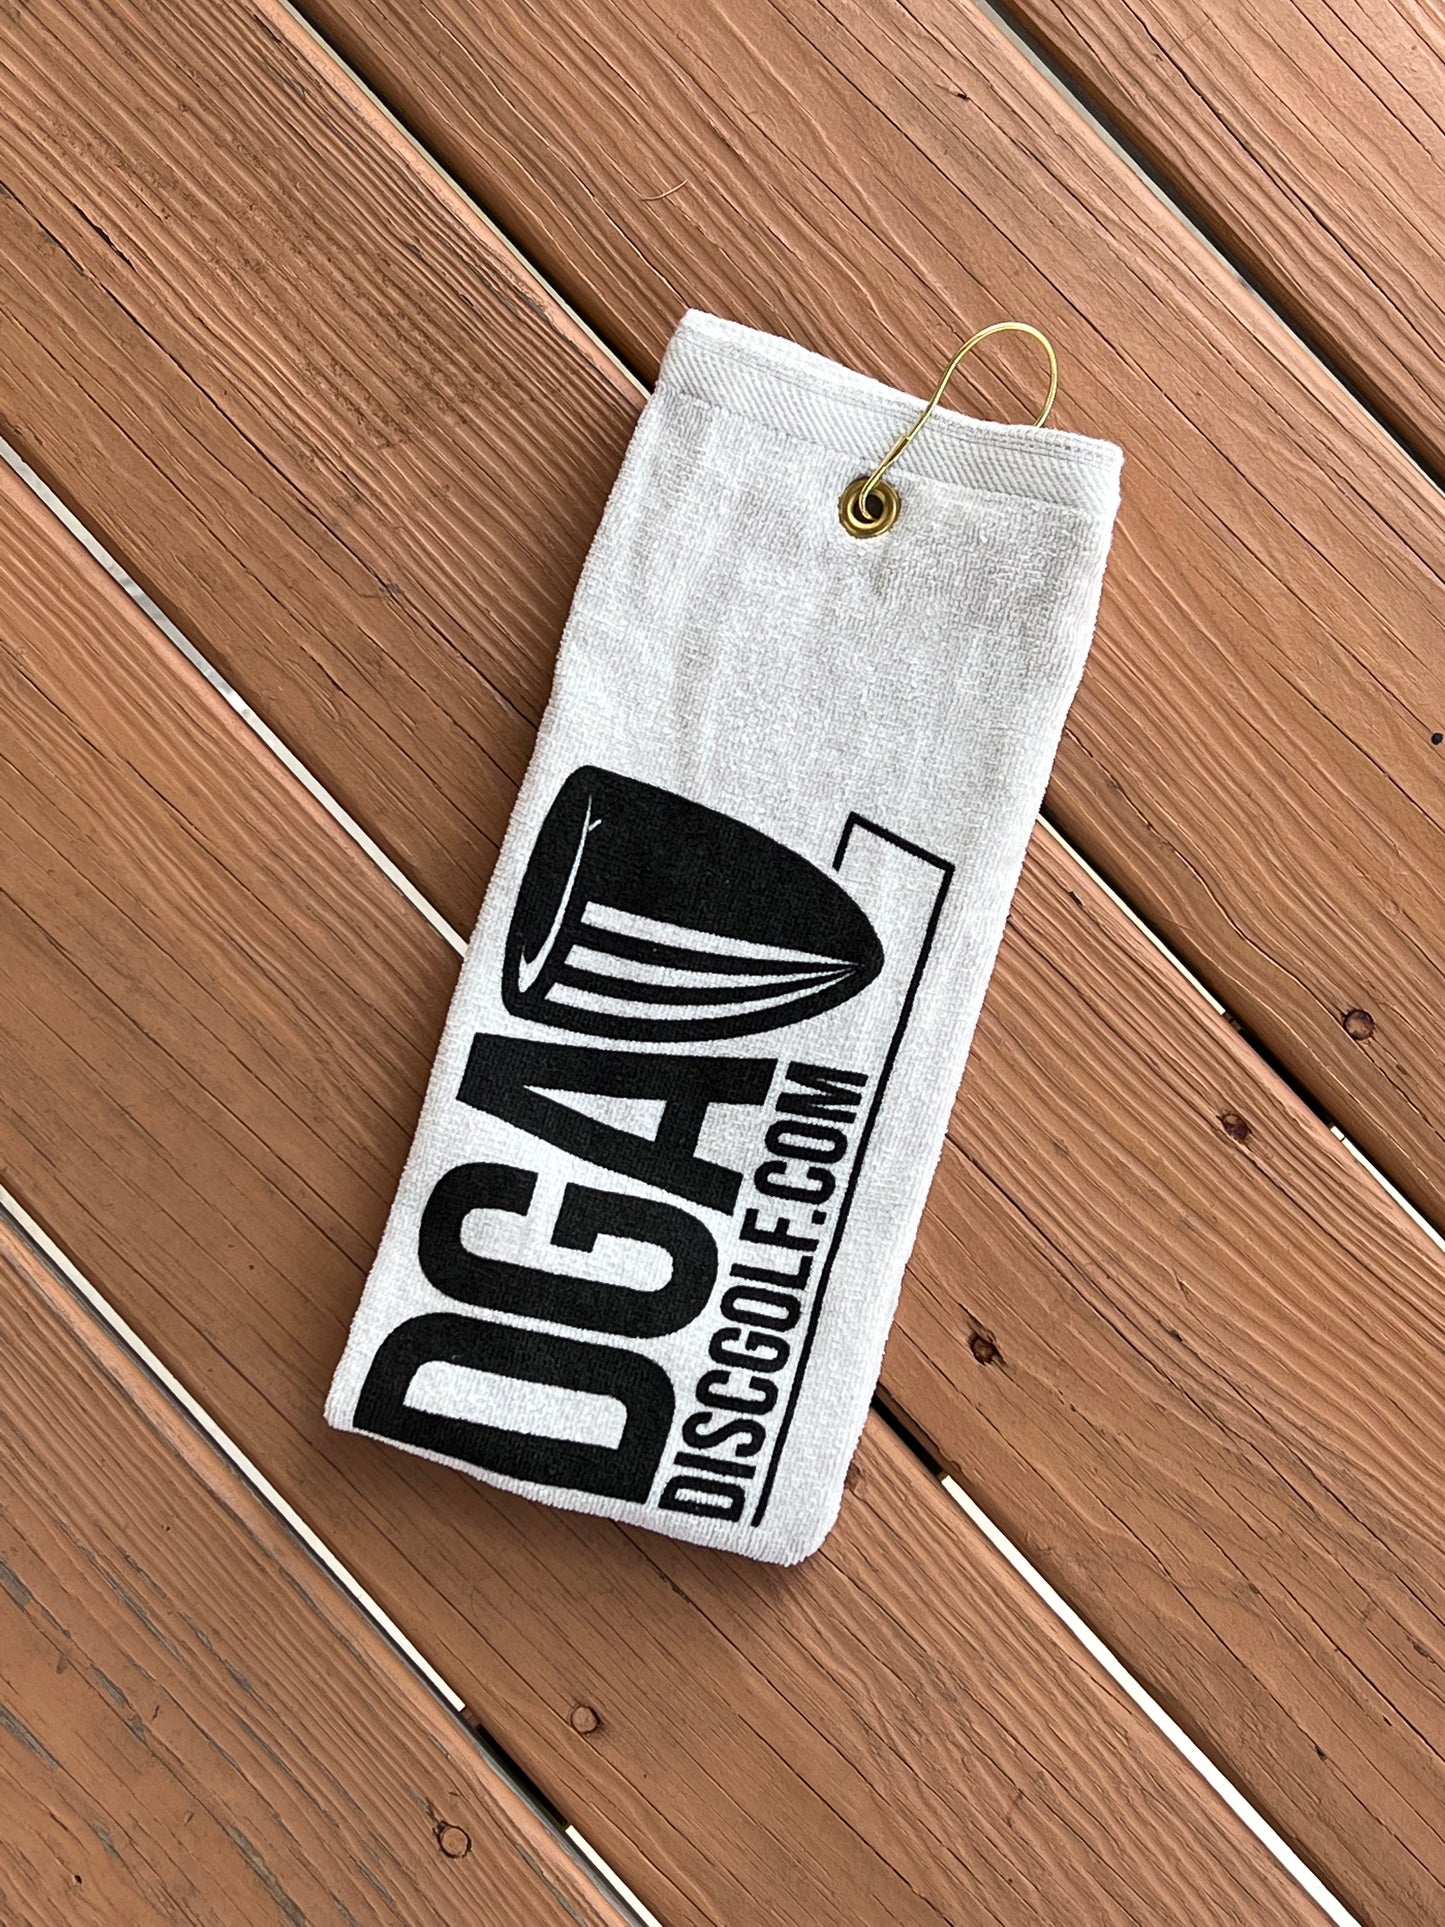 DGA Tri-Fold Towel